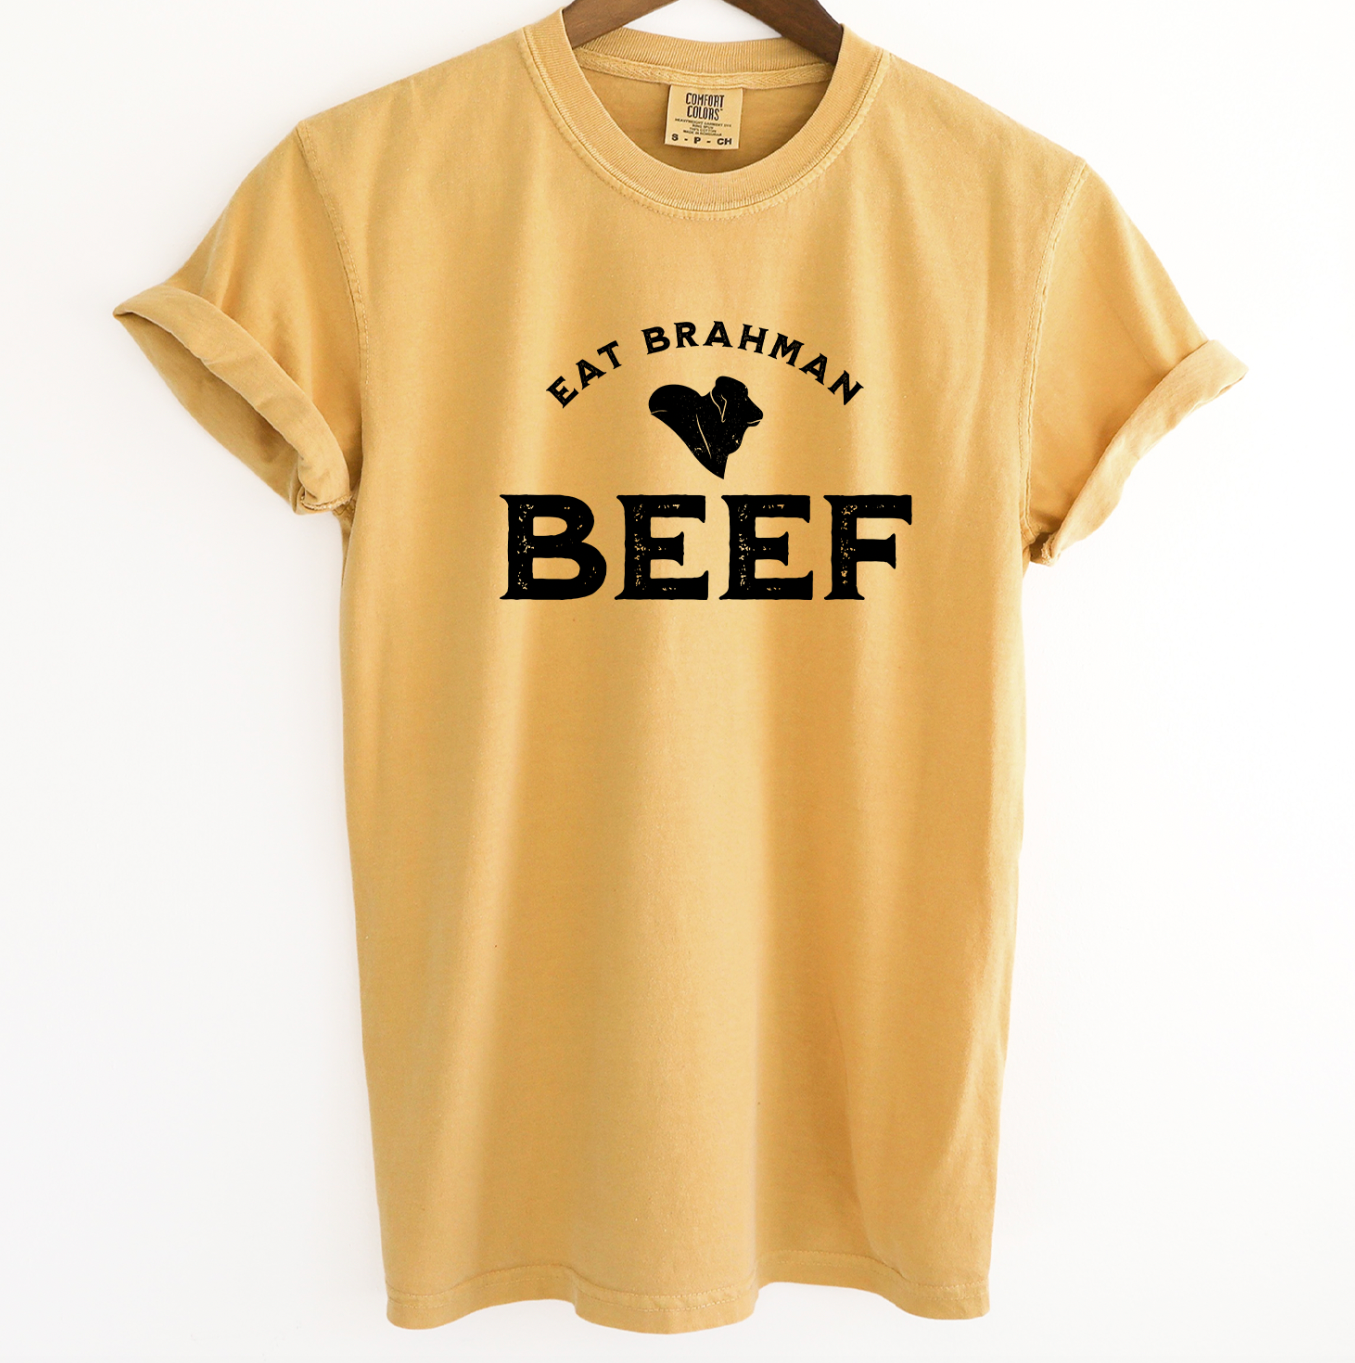 Eat Brahman Beef ComfortWash/ComfortColor T-Shirt (S-4XL) - Multiple Colors!